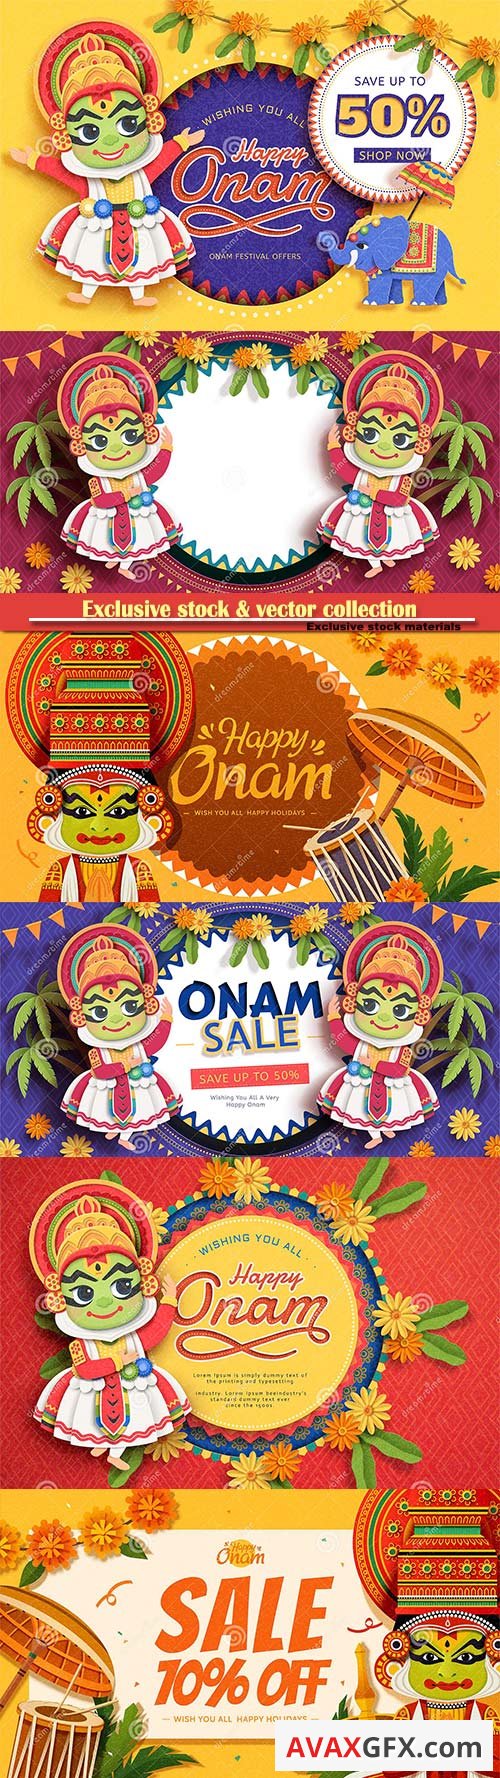 Happy Onam festival sale design with cute Kathakali dancer